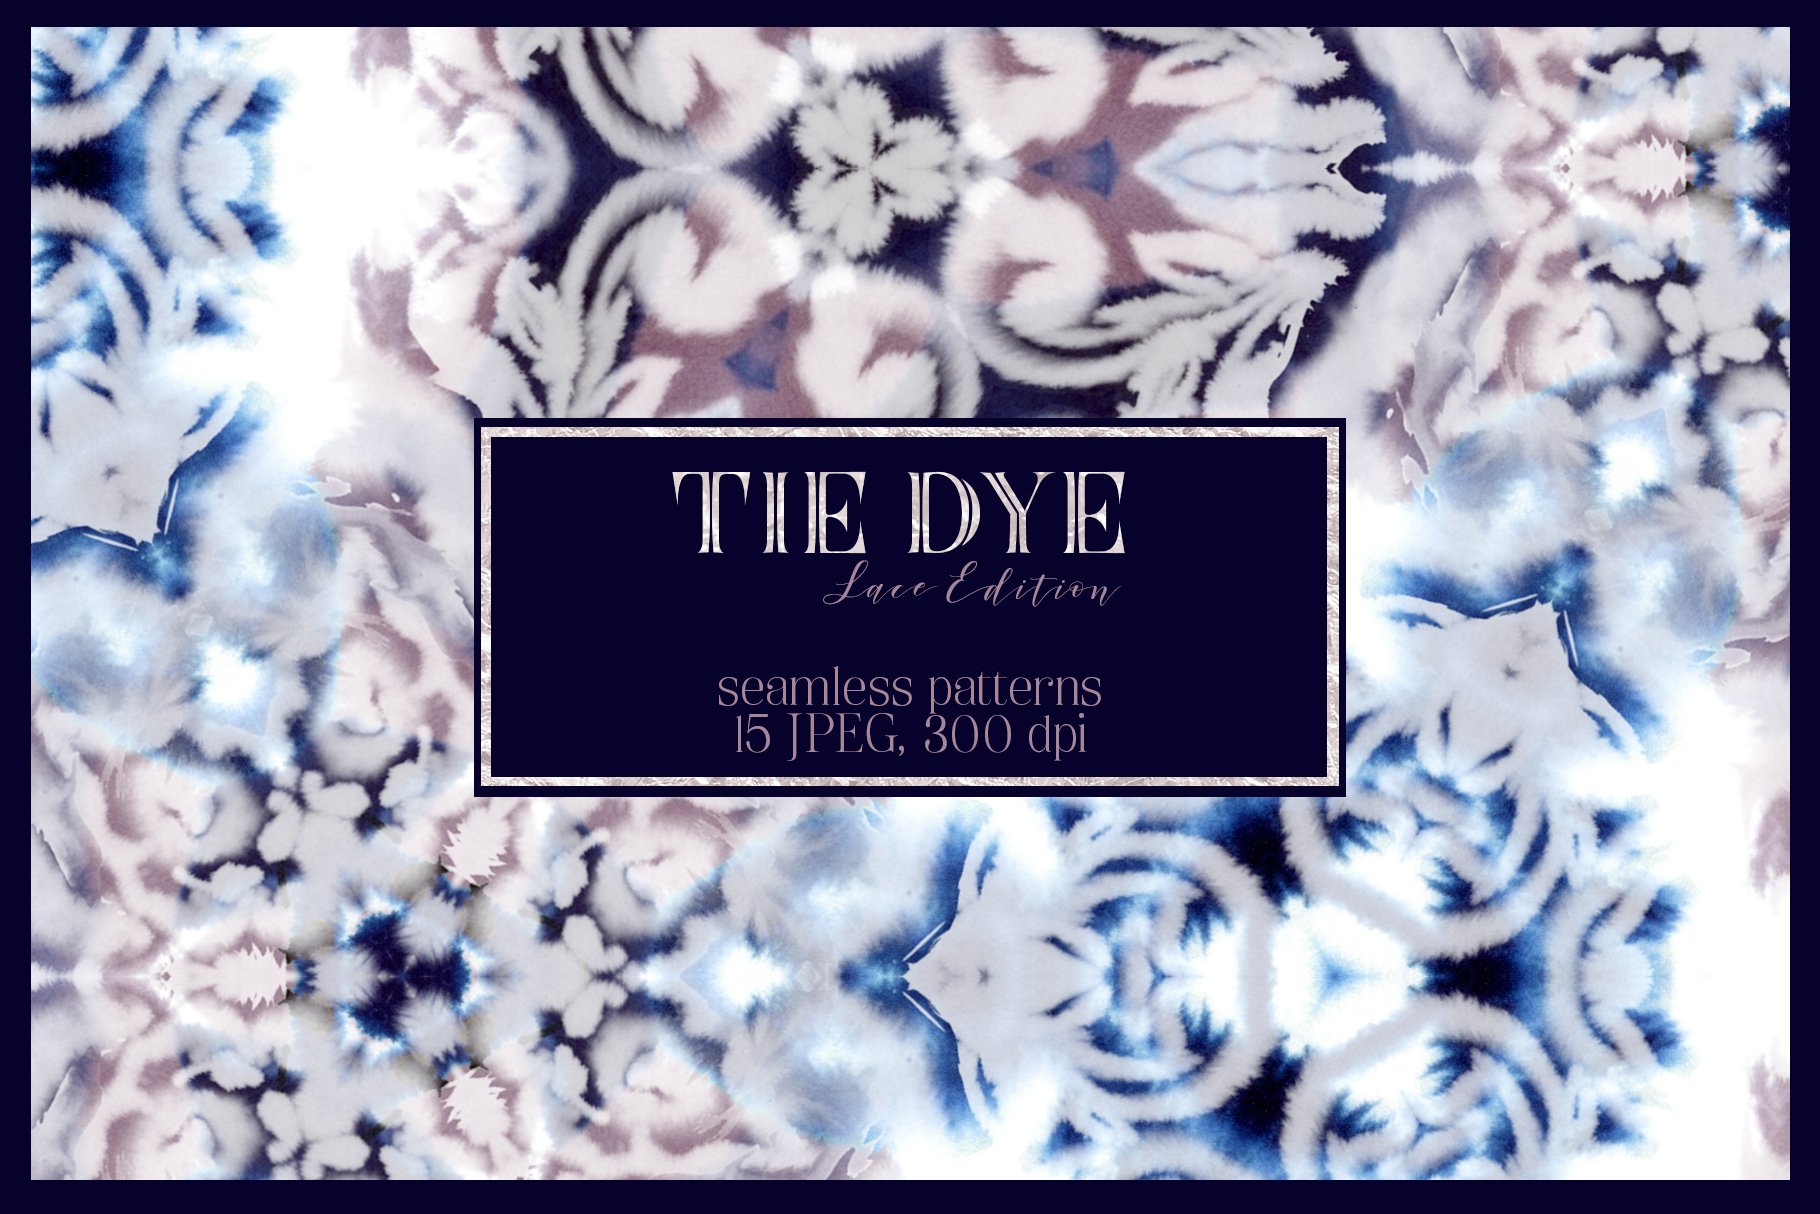 Tie Dye Pattern Set. Lace Edition preview image.